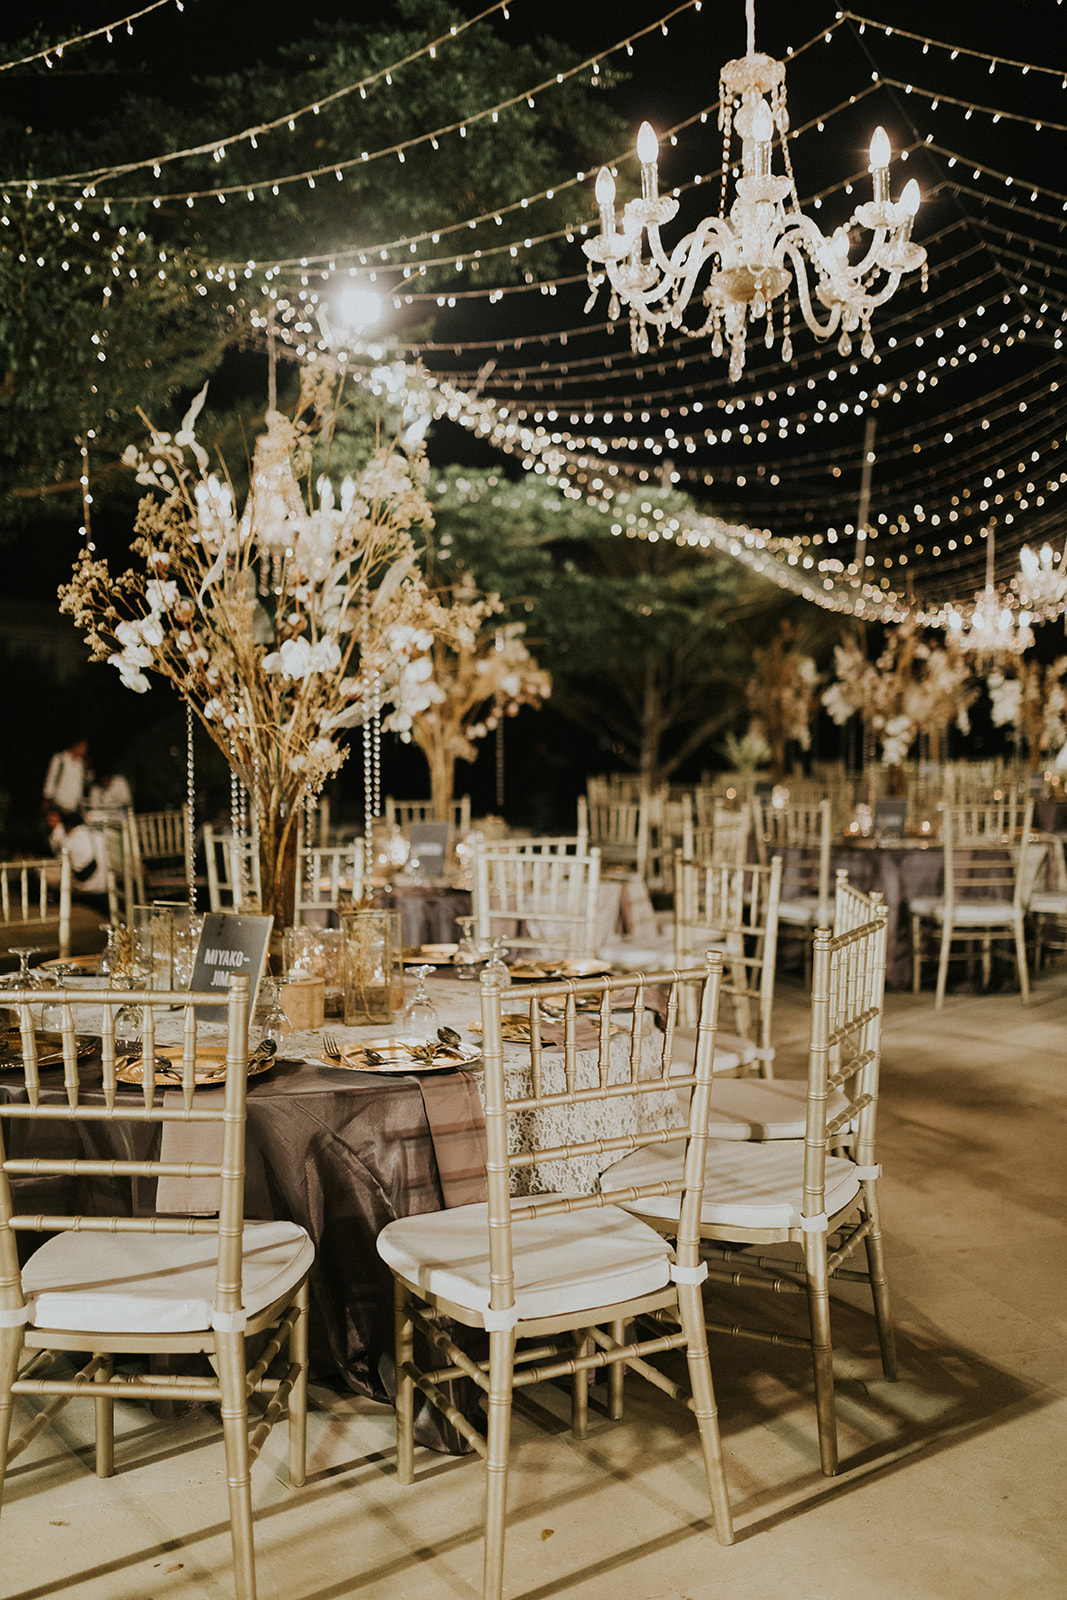 Rustic glamorous wedding theme that radiates warmth and elegance.